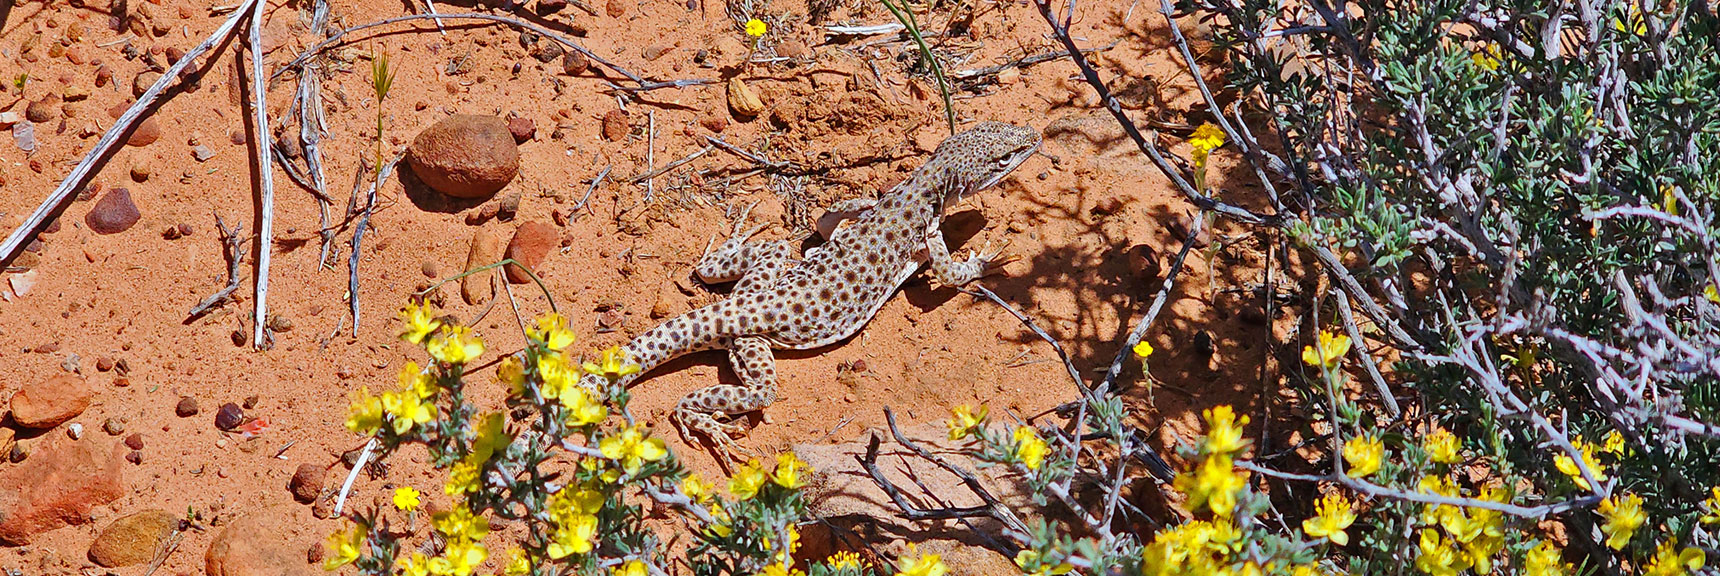 Long-nosed Leopard Lizard (Gambelia Wislizenii) : Annual Mojave Desert Wildflowers | Juniper Canyon | Red Rock Canyon National Conservation Area, Nevada | David Smith | LasVegasAreaTrails.com